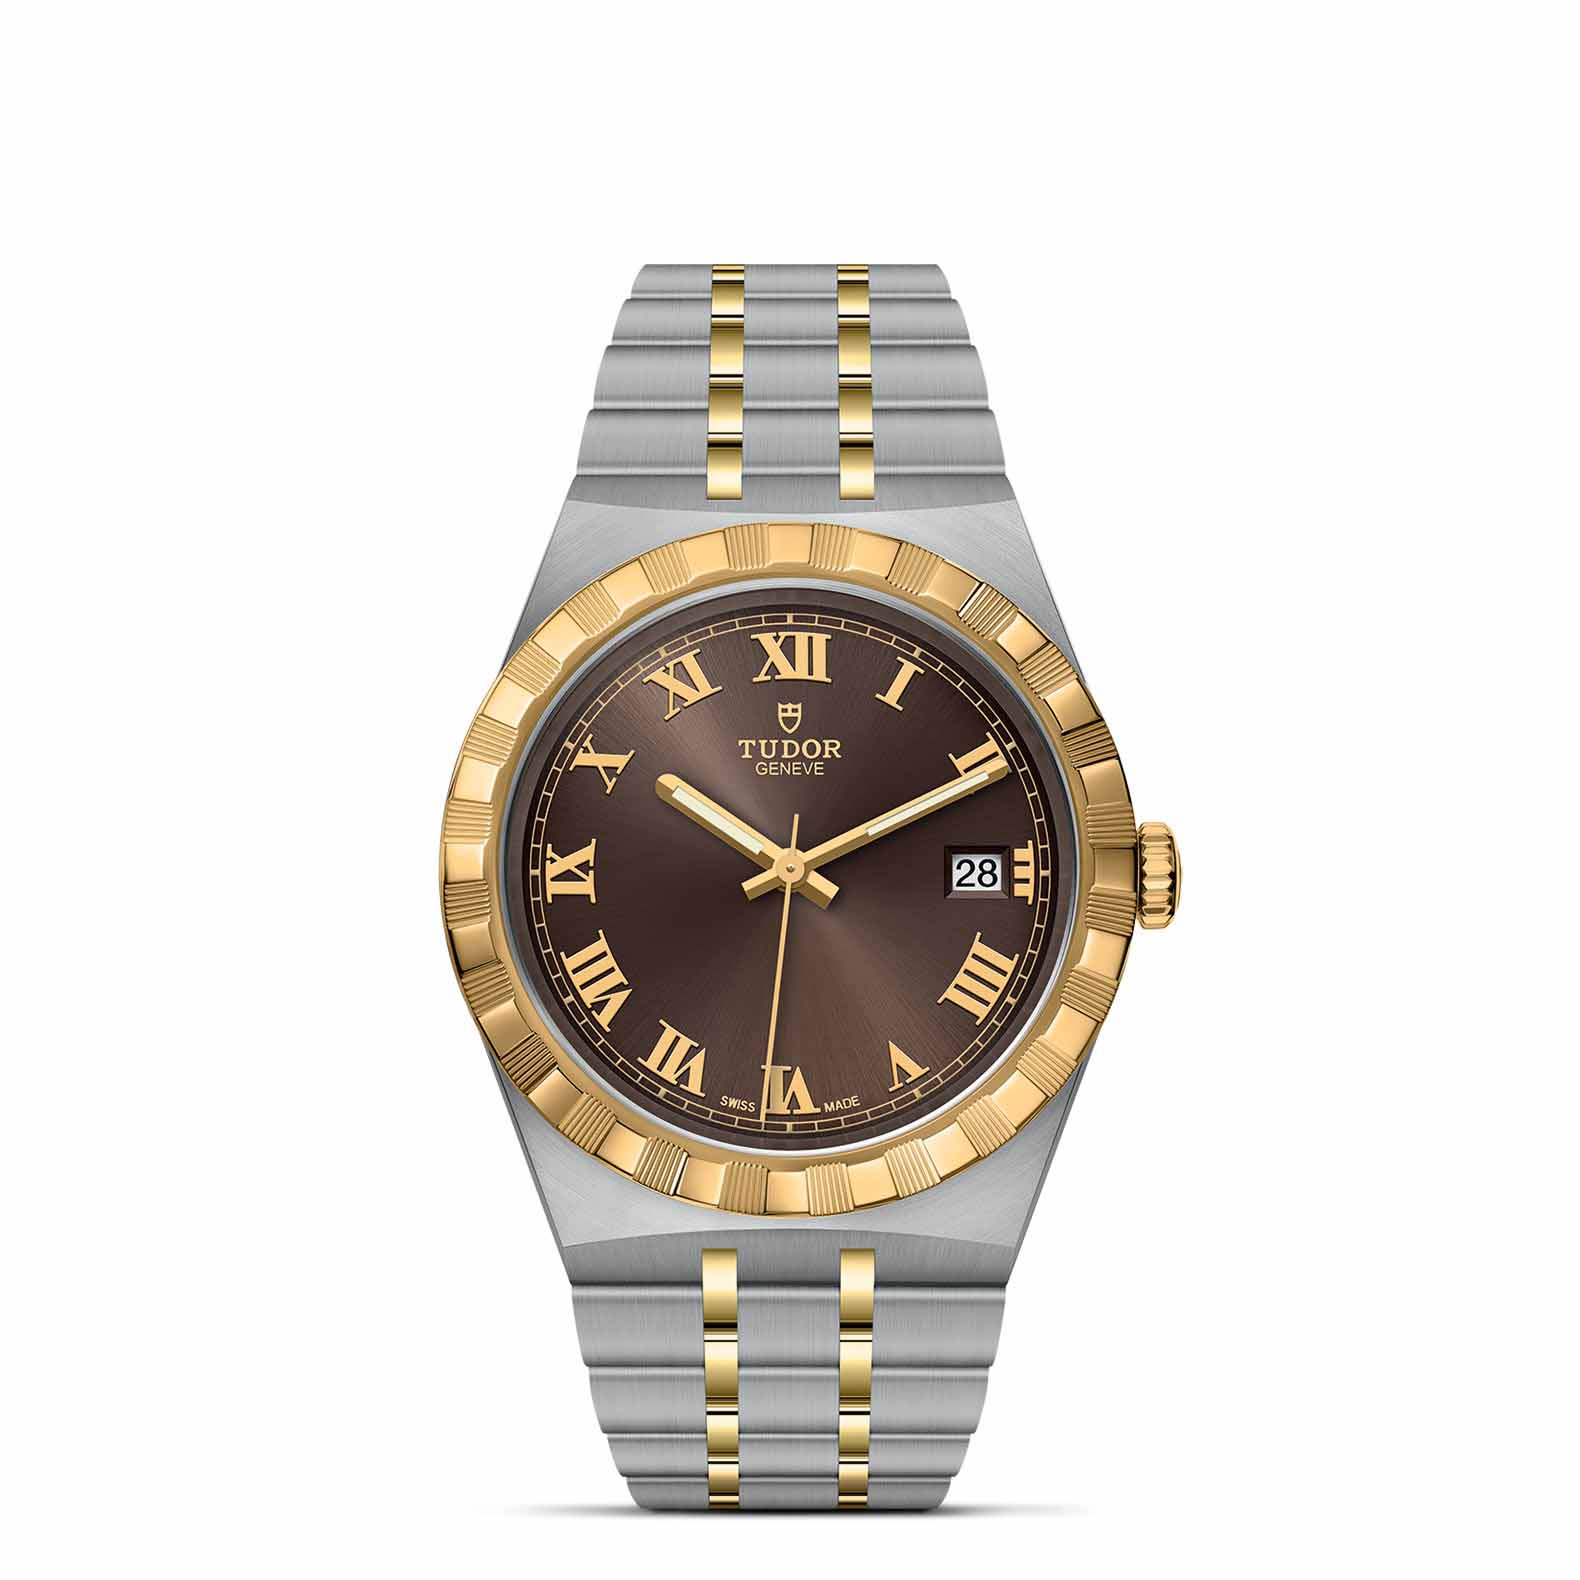 NEW Tudor Brand Watch Mens Military Waterproof Wristwatch Mechanical Watches  at best price in Dehradun